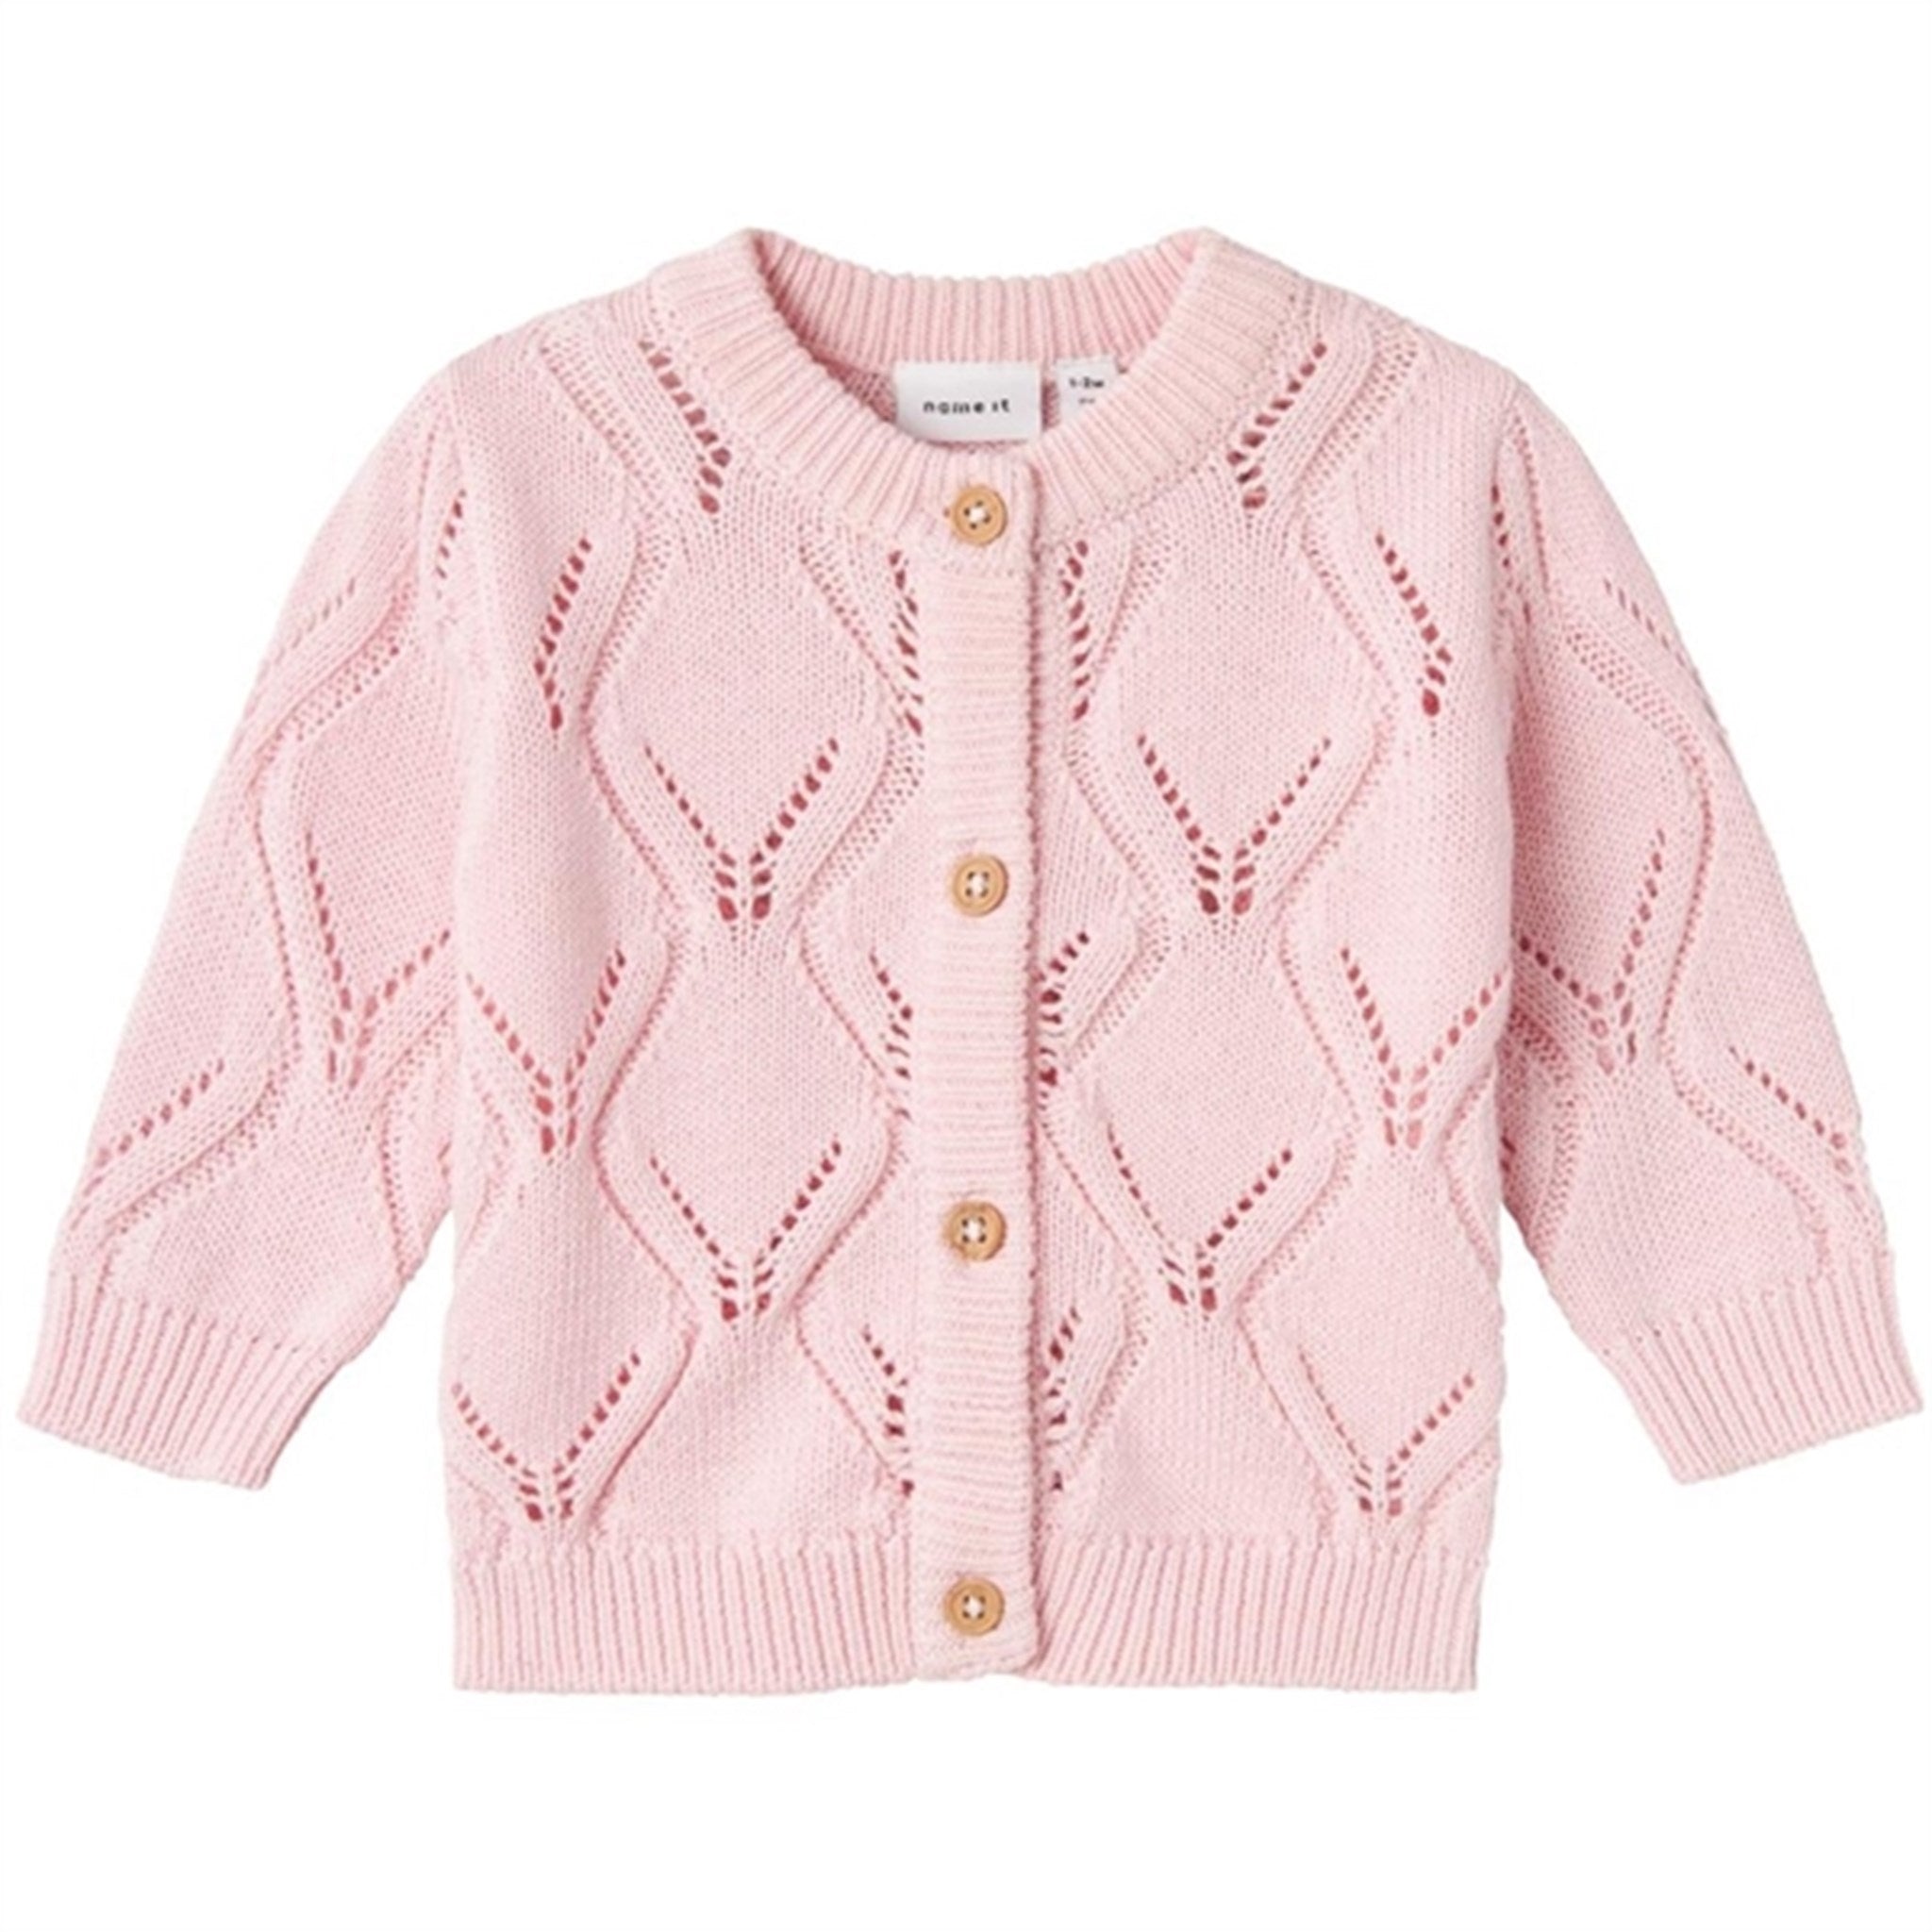 Name it Parfait Pink Fopolly Knit Cardigan